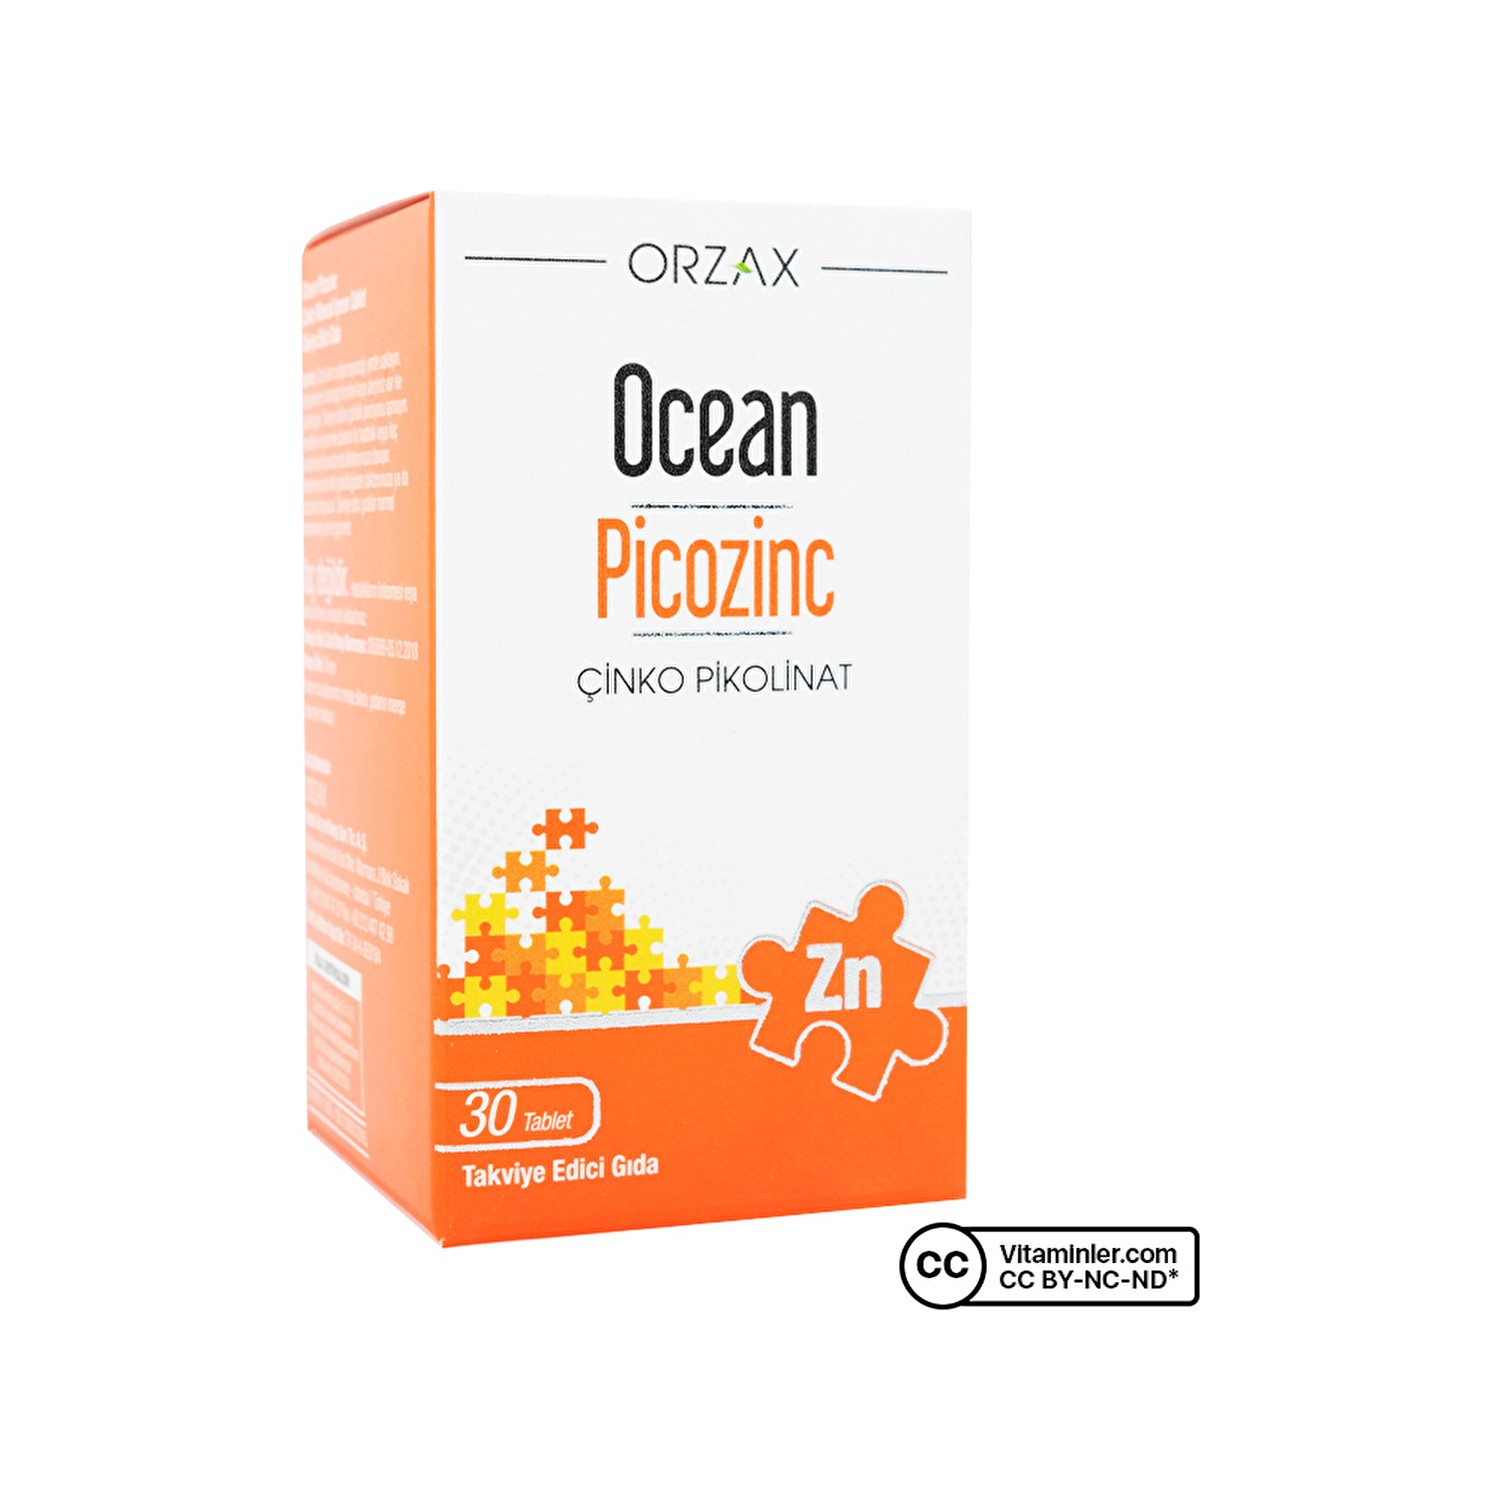 Пищевая добавка Ocean Picozinc Cinko Picolinate, 30 таблеток пищевая добавка orzax ocean picozinc cinko picolinate 2 упаковки по 30 таблеток